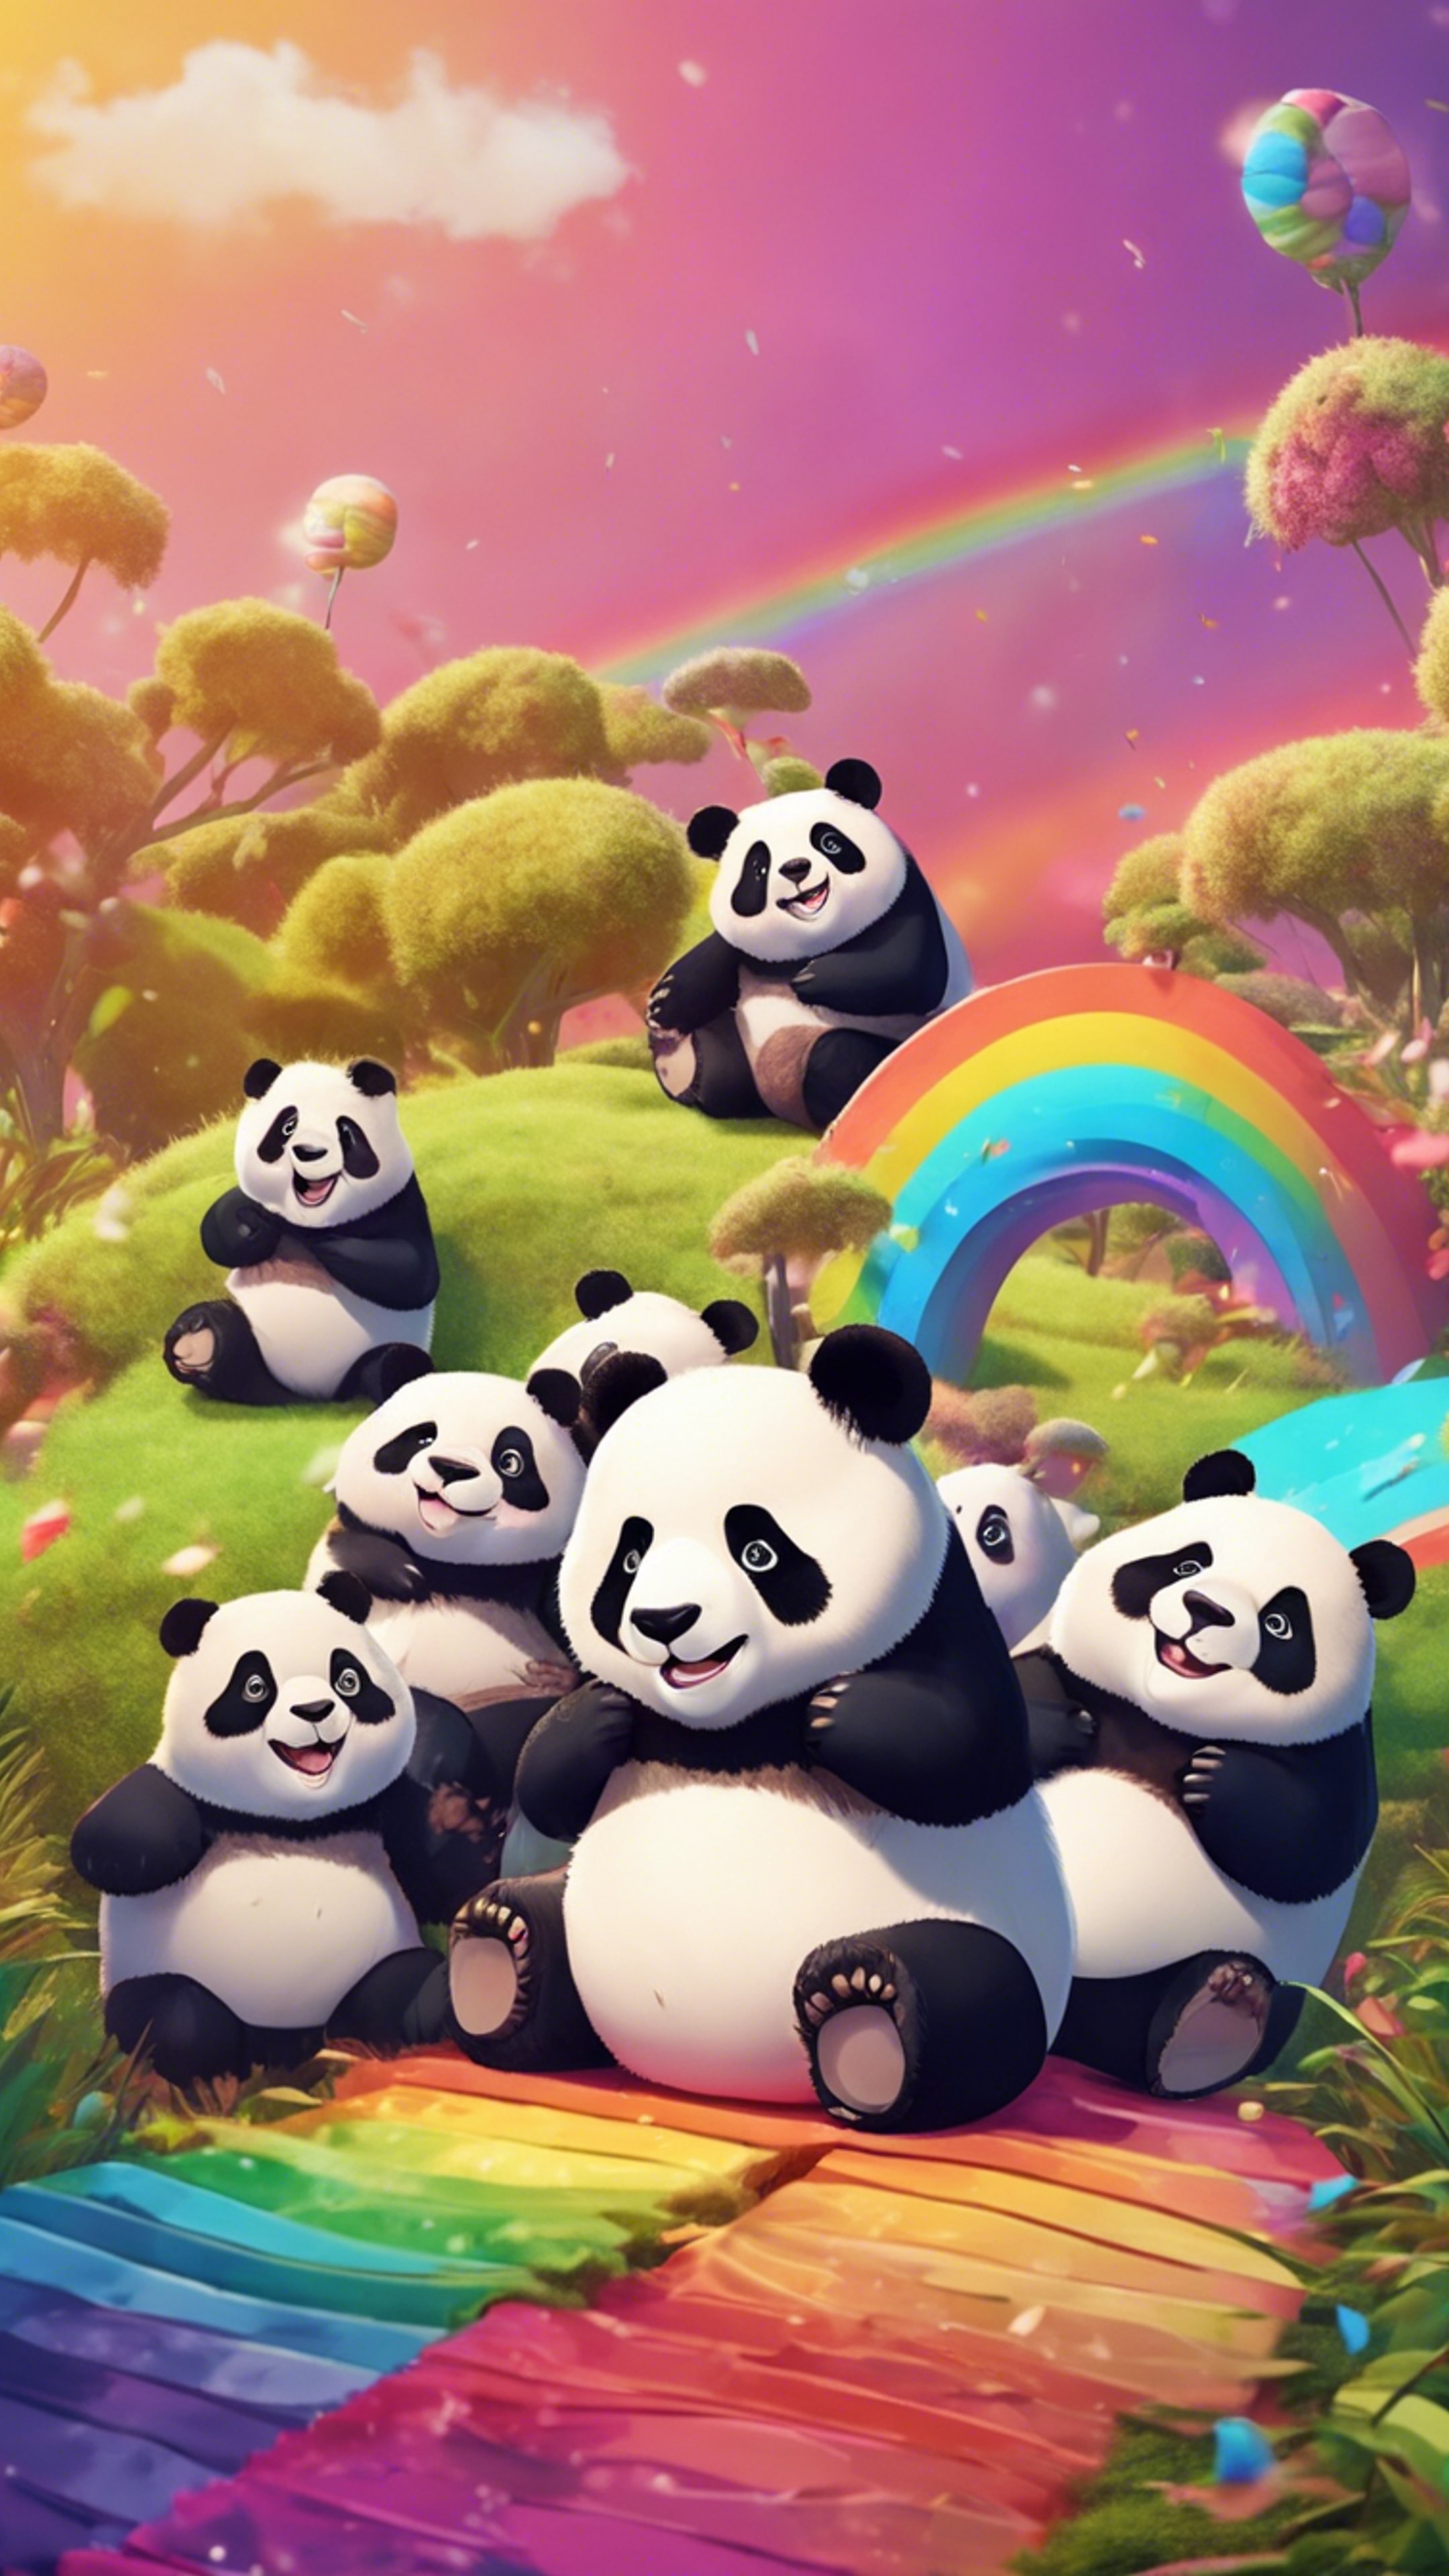 A group of chubby, adorable pandas sliding down a vibrant rainbow. 墙纸[164879d3f9f4475687c2]